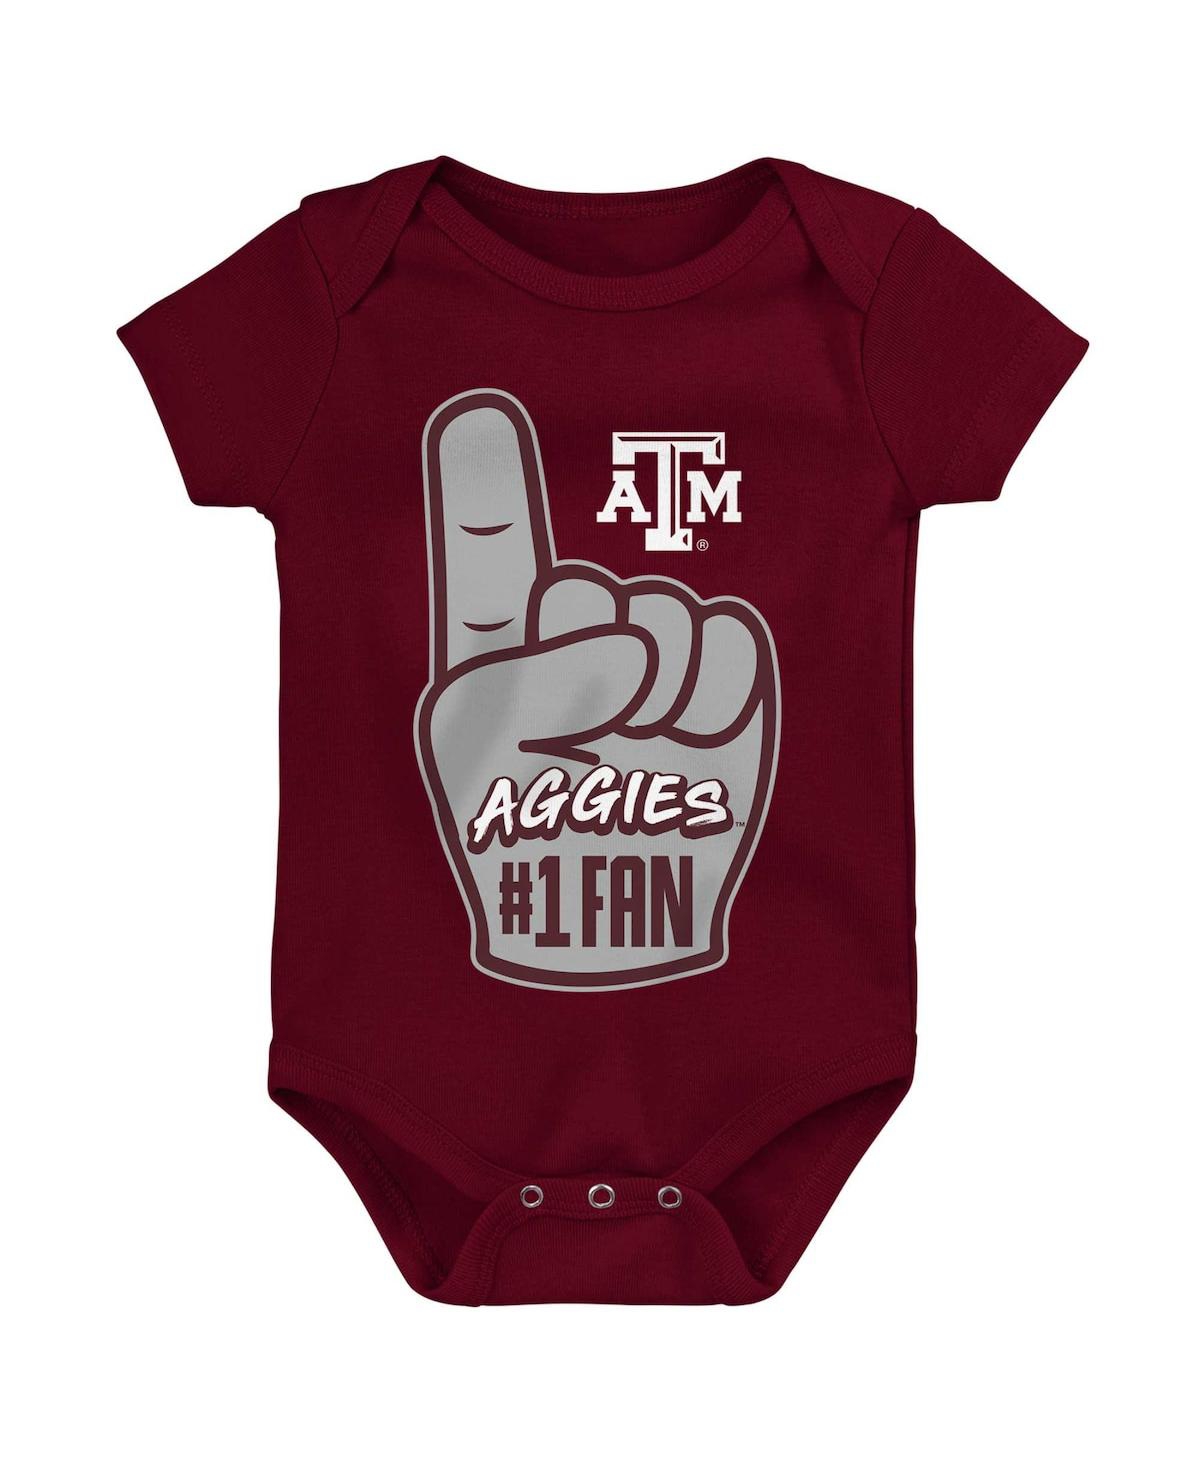 Outerstuff Babies' Newborn And Infant Boys And Girls Maroon Texas A&m Aggies #1 Fan Foam Finger Bodysuit